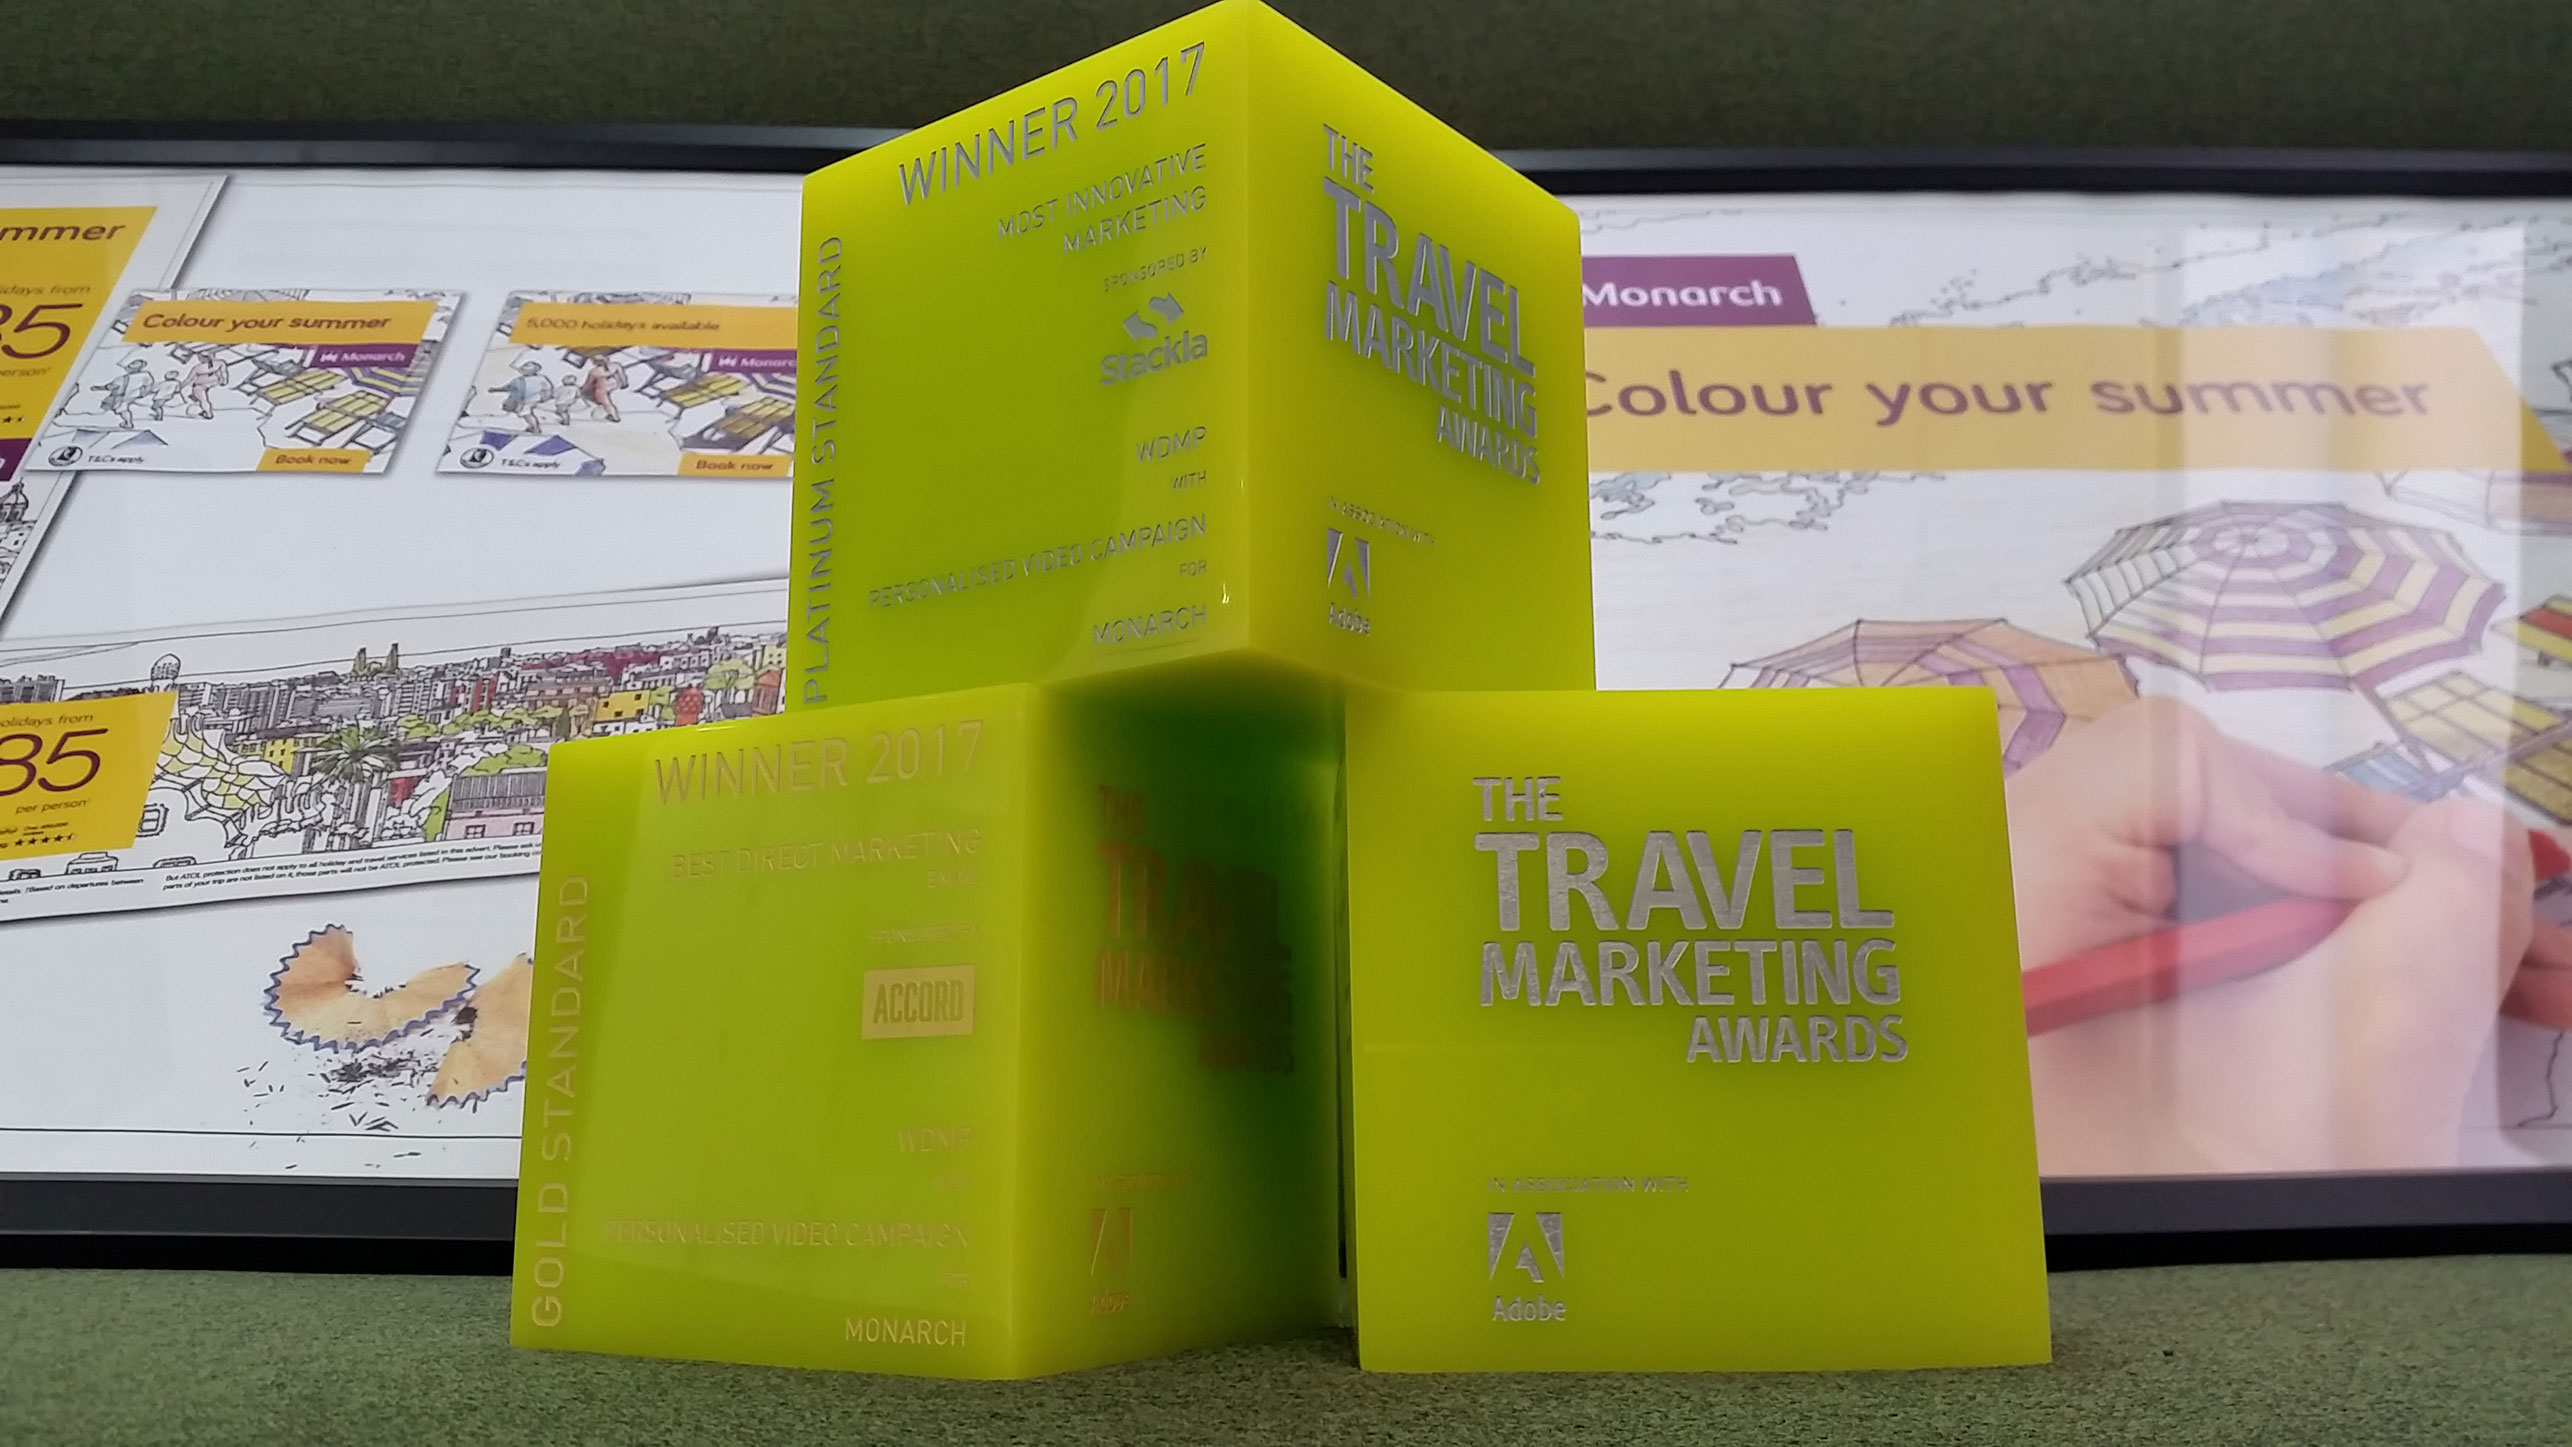 The Travel Marketing Awards